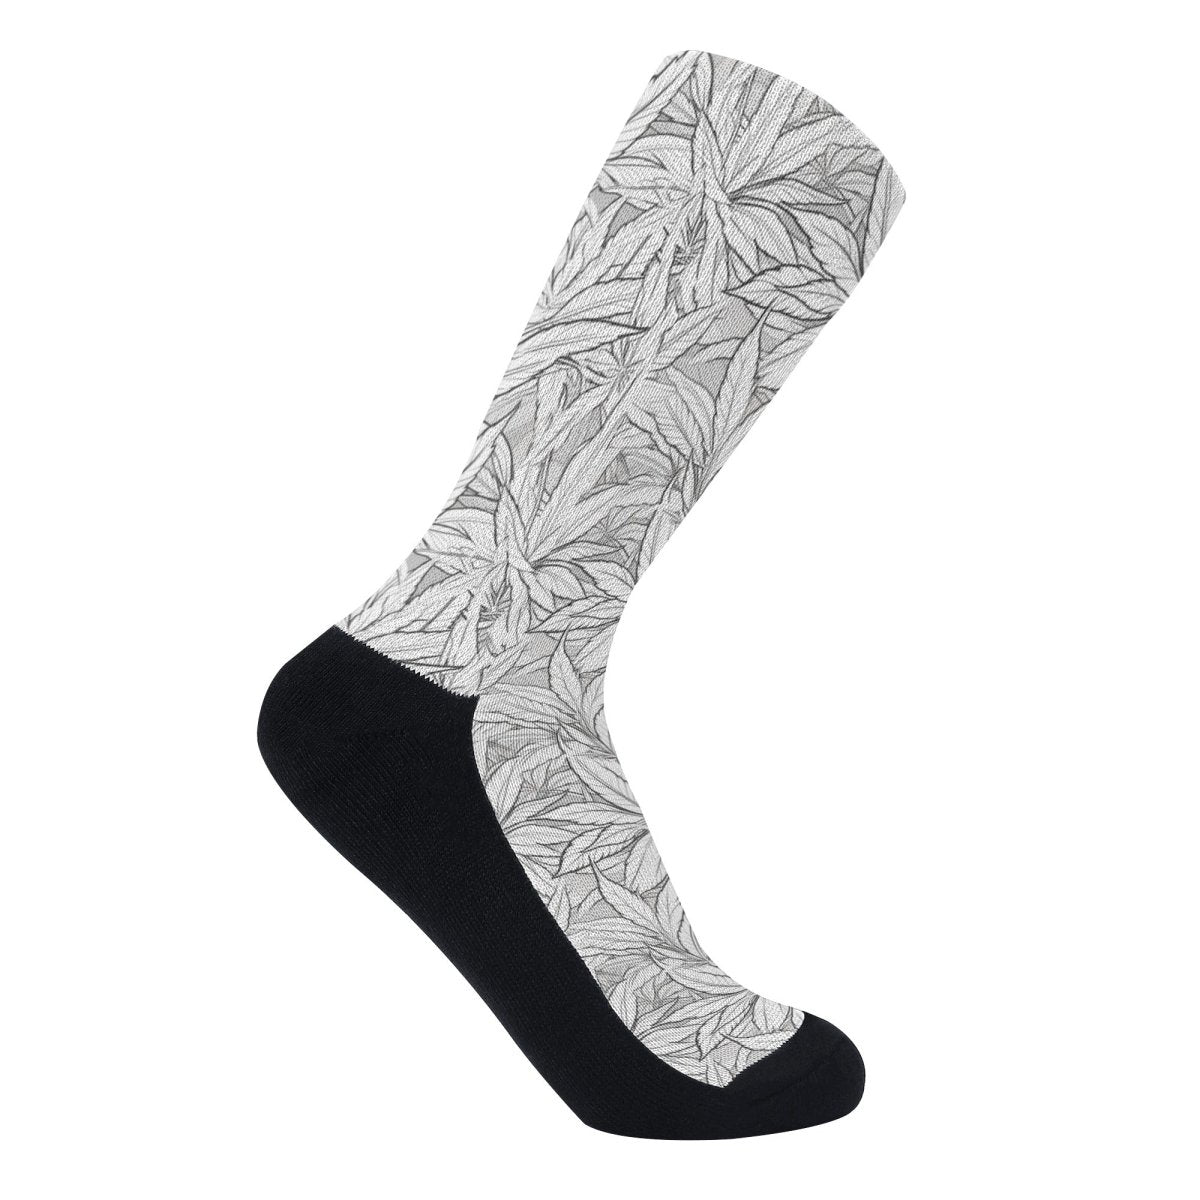 B&W Leaves Socks - Mainly High